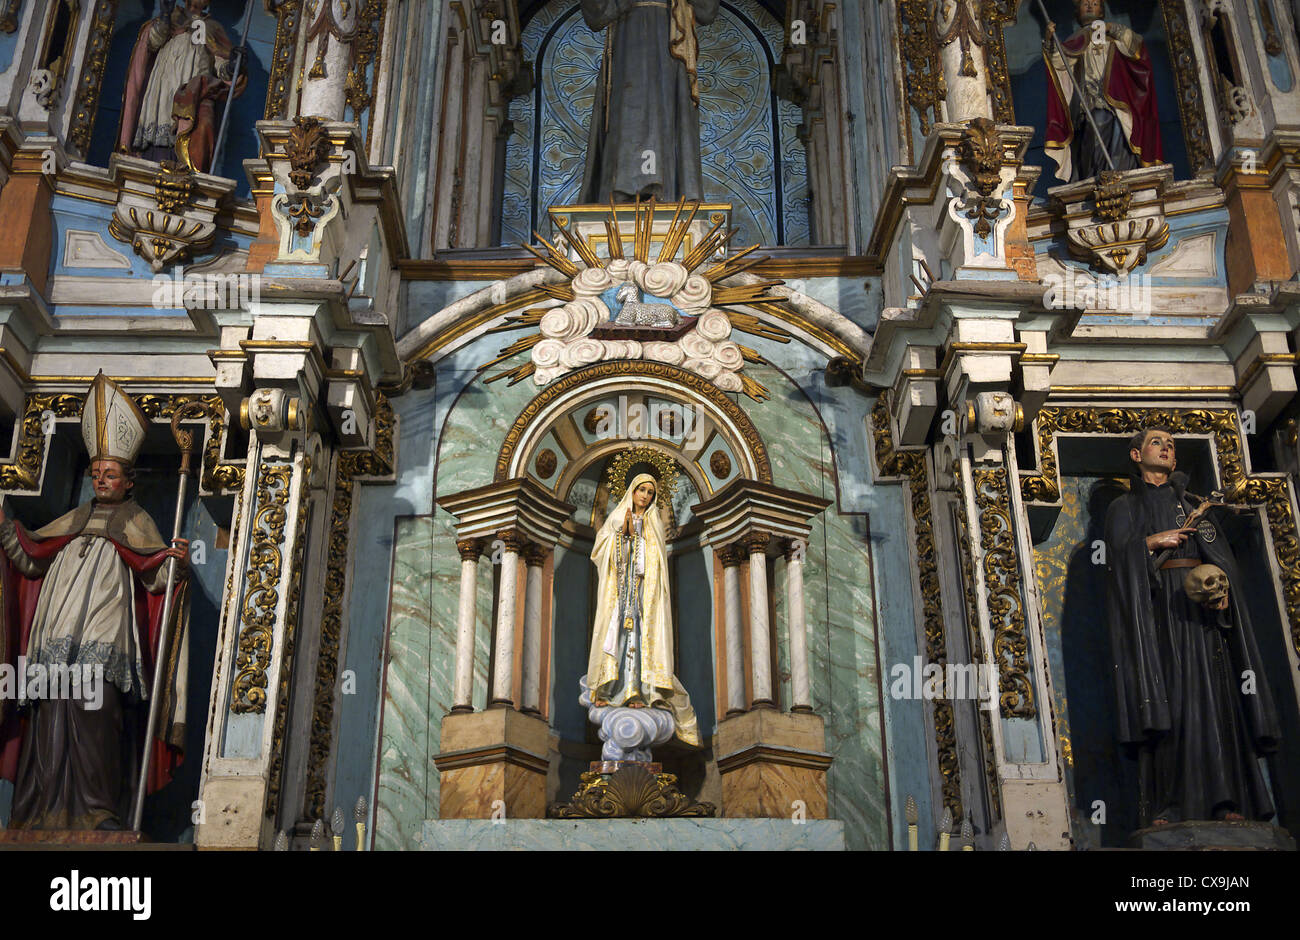 Santiago de Compostela, Spain. The Cathedral of Saint James' interior. Stock Photo